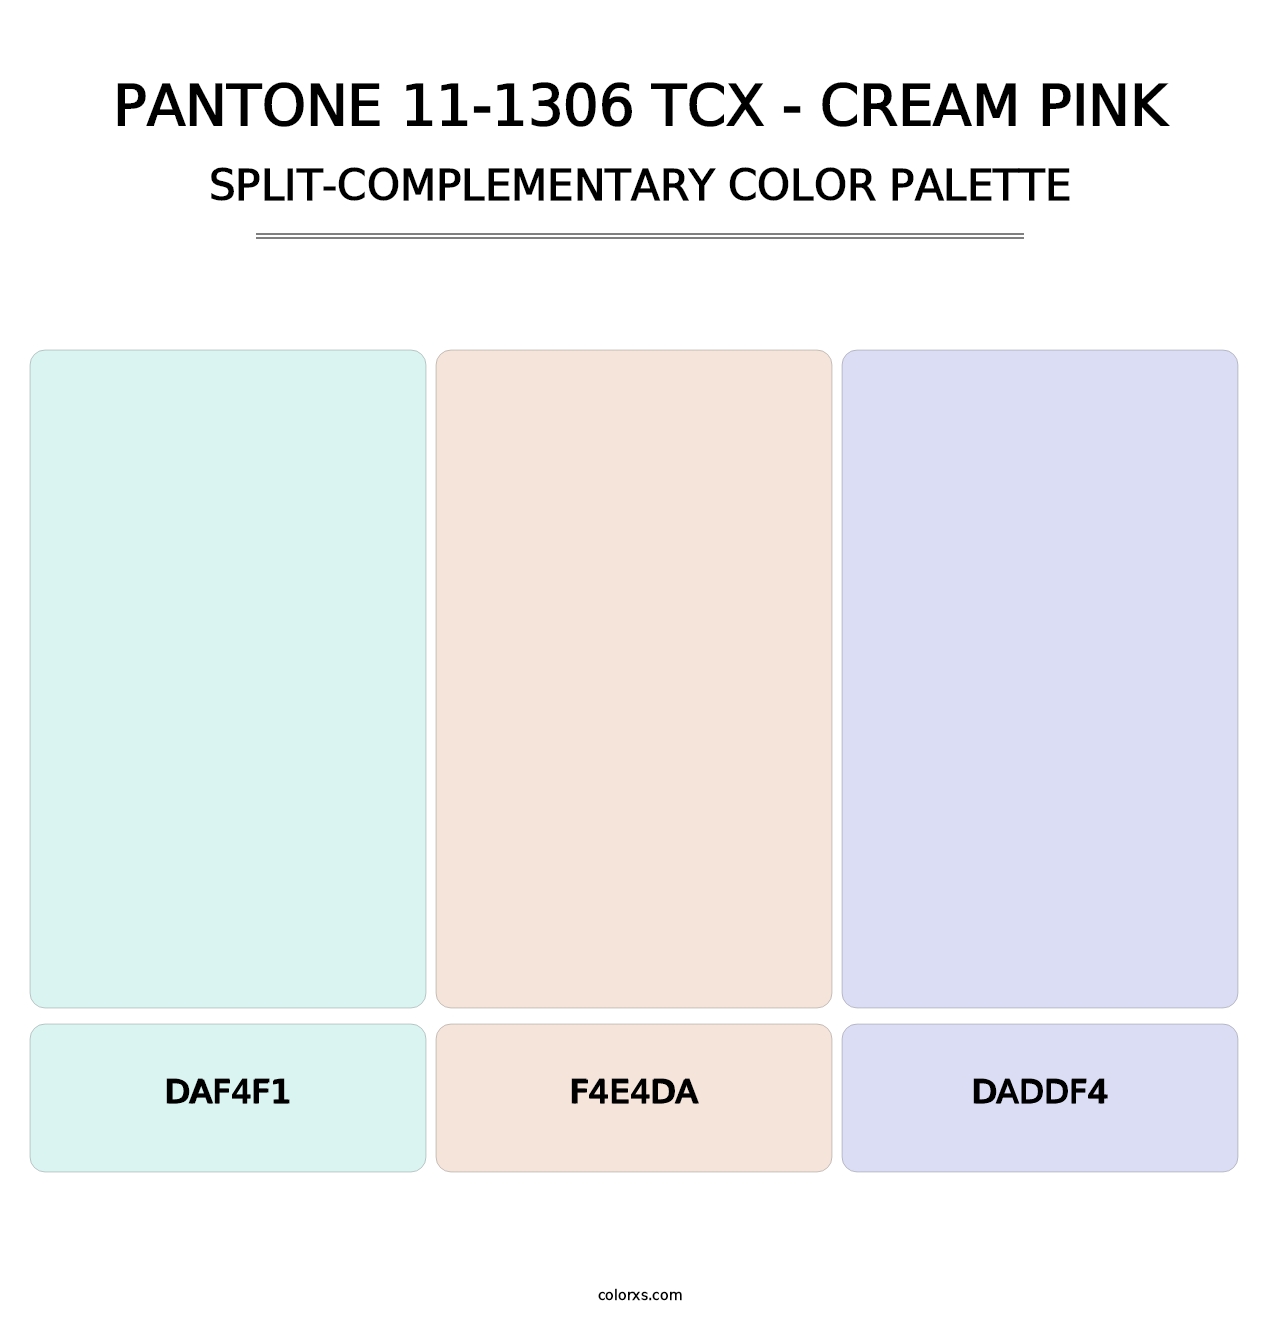 PANTONE 11-1306 TCX - Cream Pink - Split-Complementary Color Palette